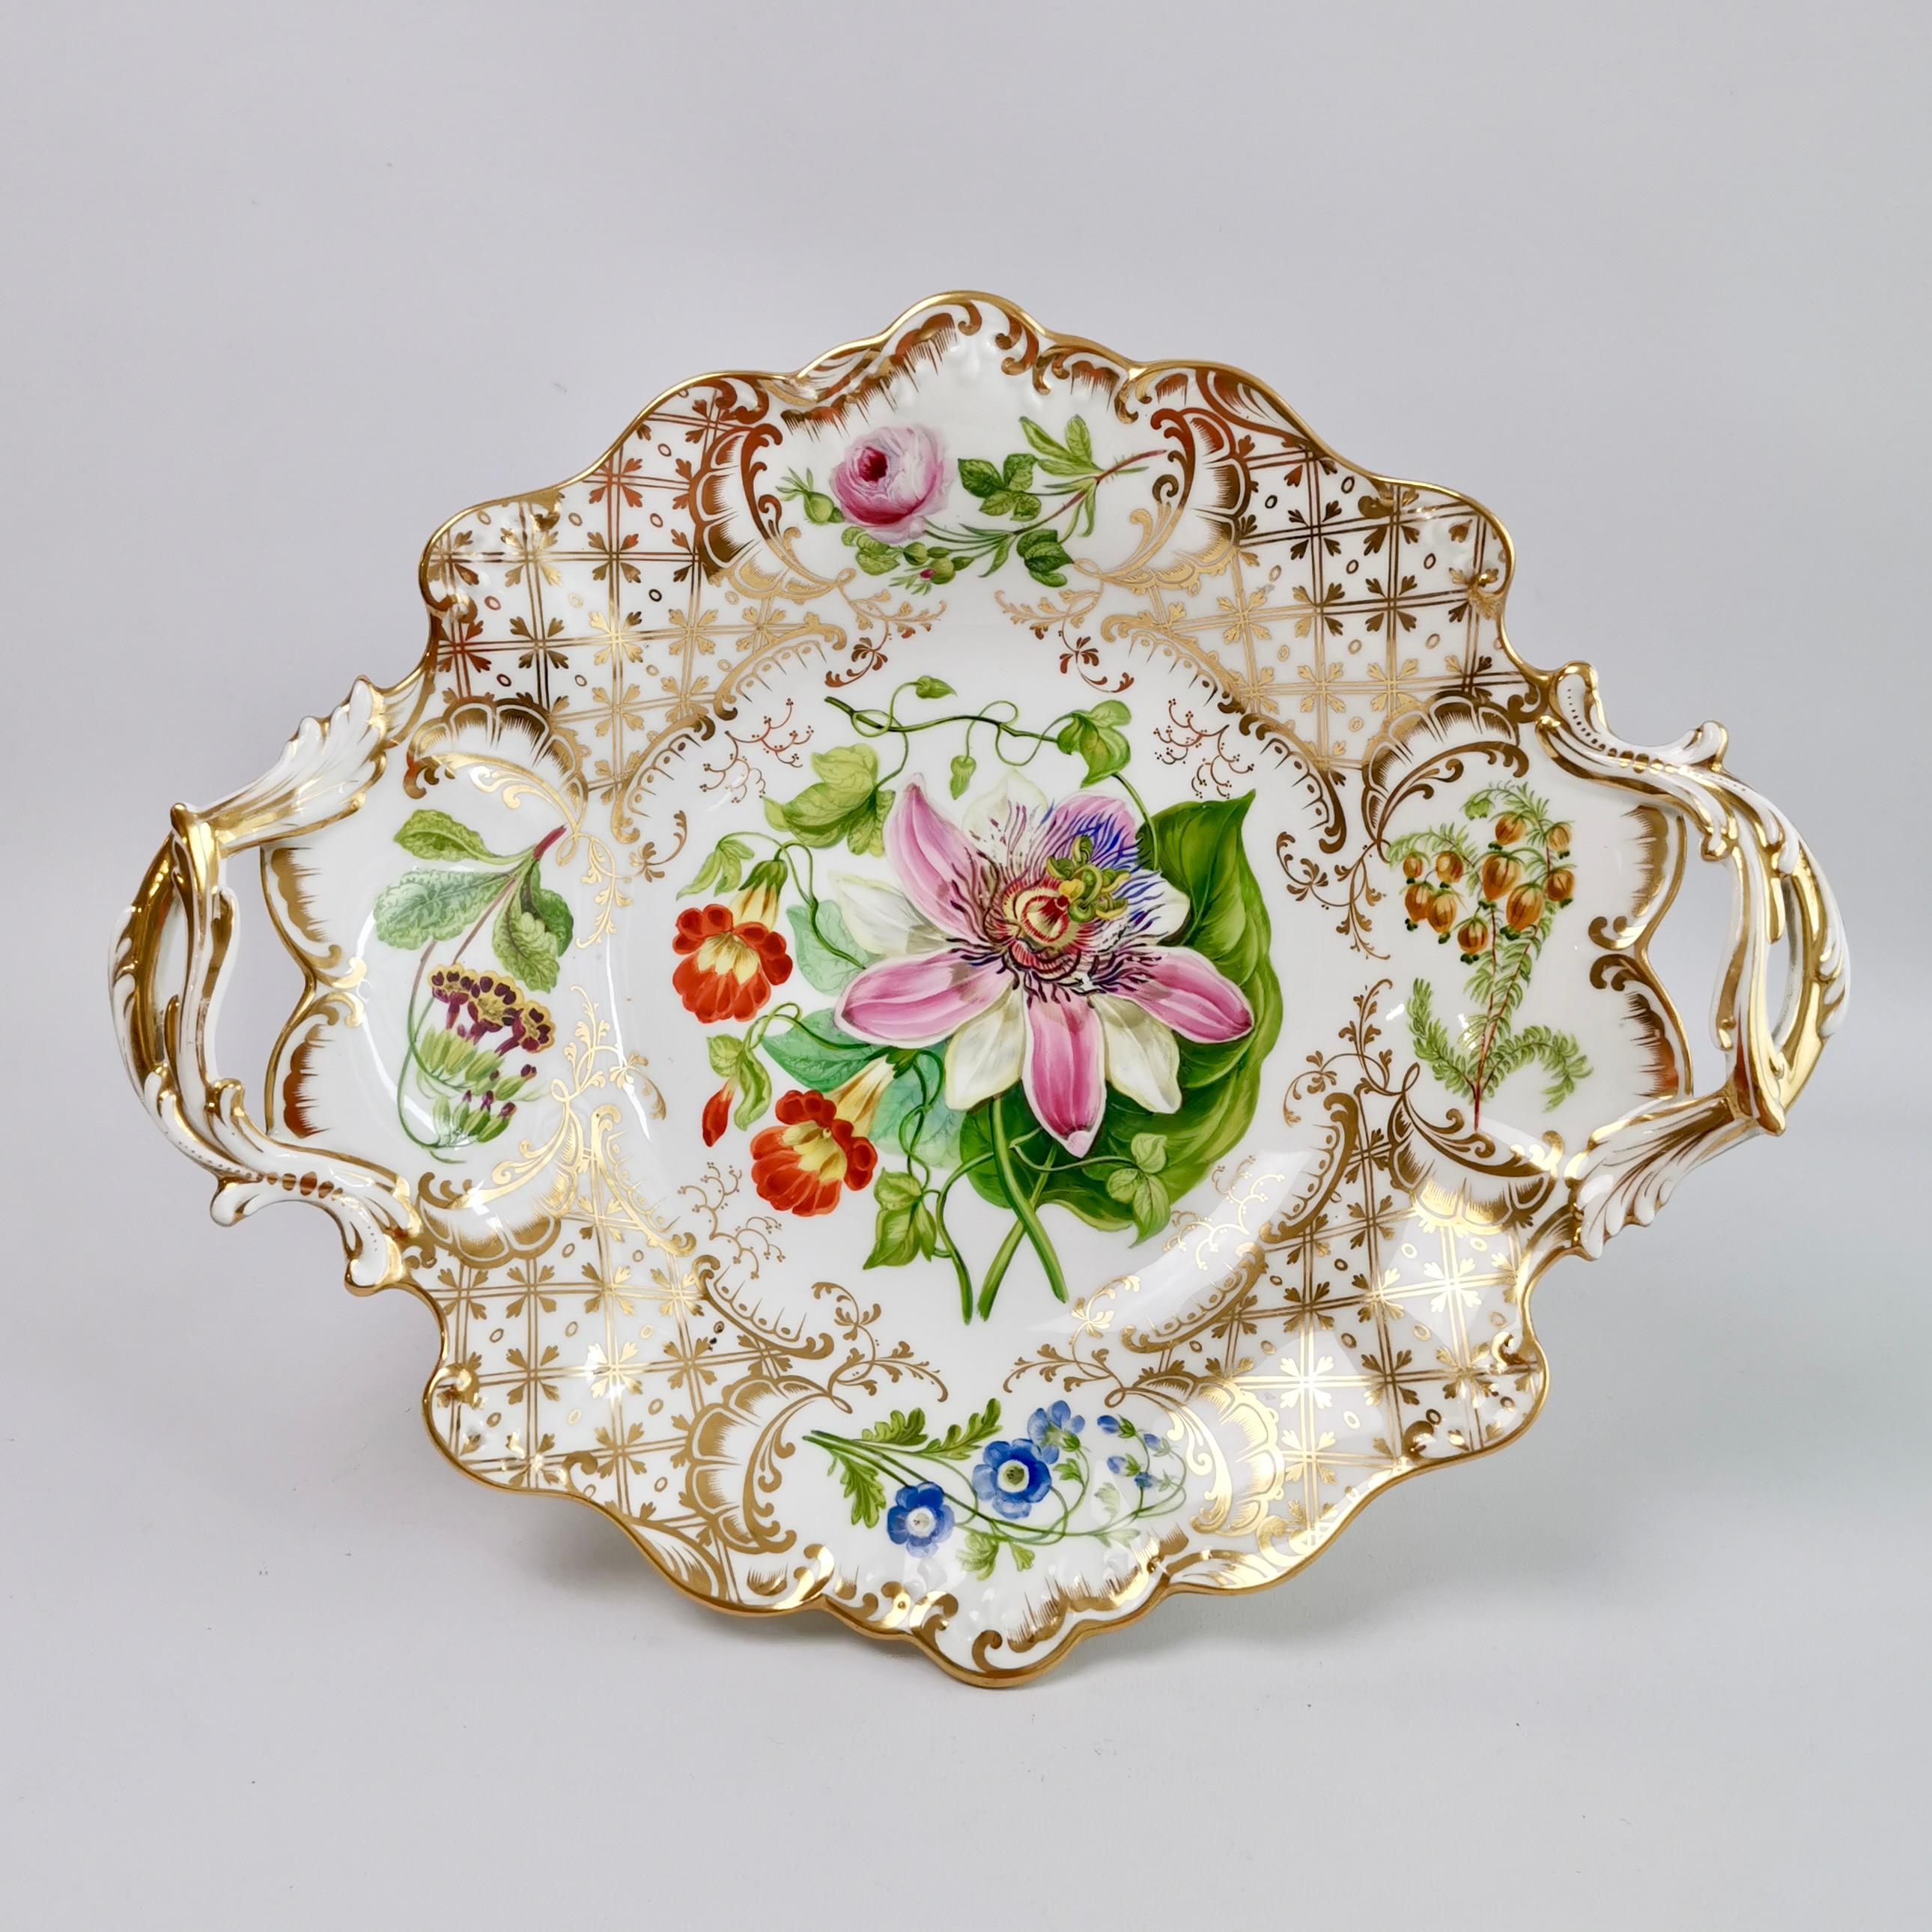 Victorian Ridgway High Footed Porcelain Dessert Comport, Sublime Flowers, Gilt, 1845-1850